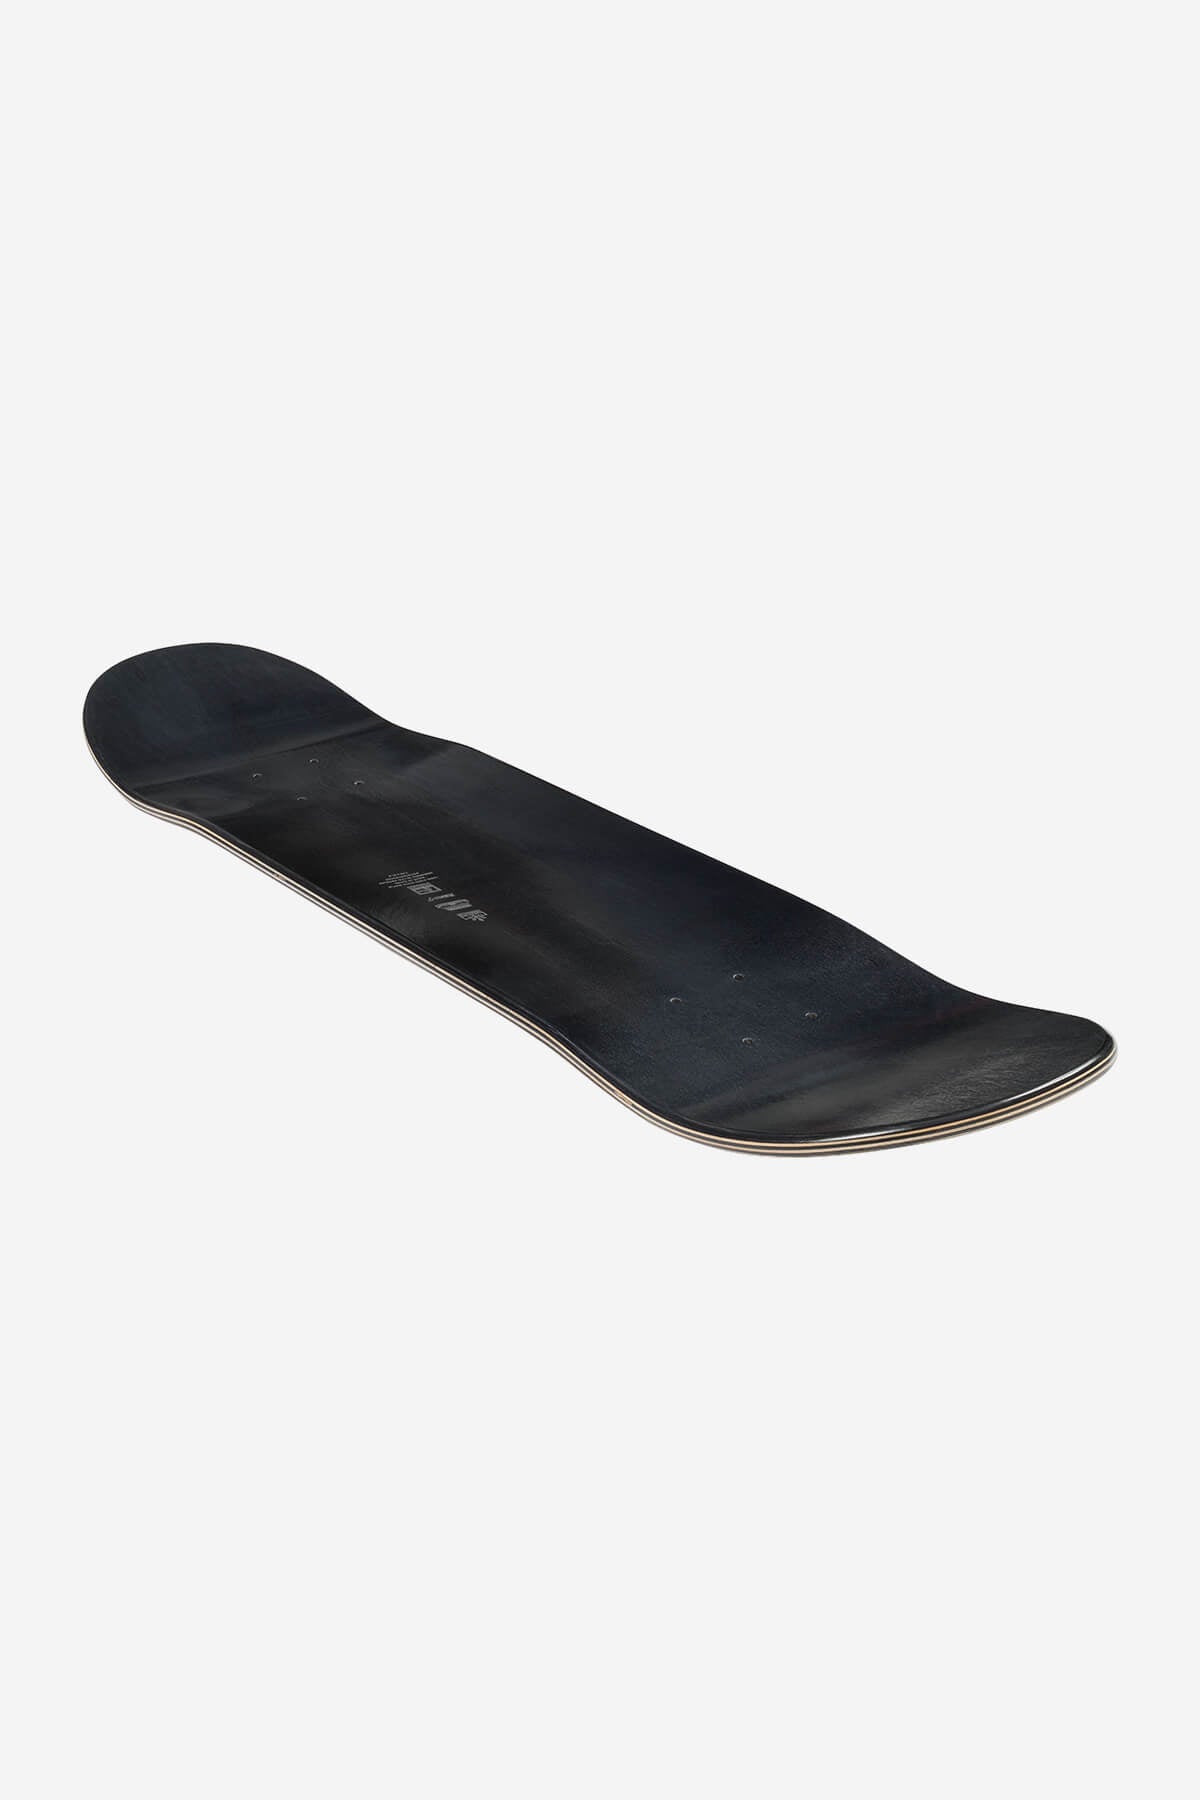 g1 lineform nero 7,75" skateboard deck